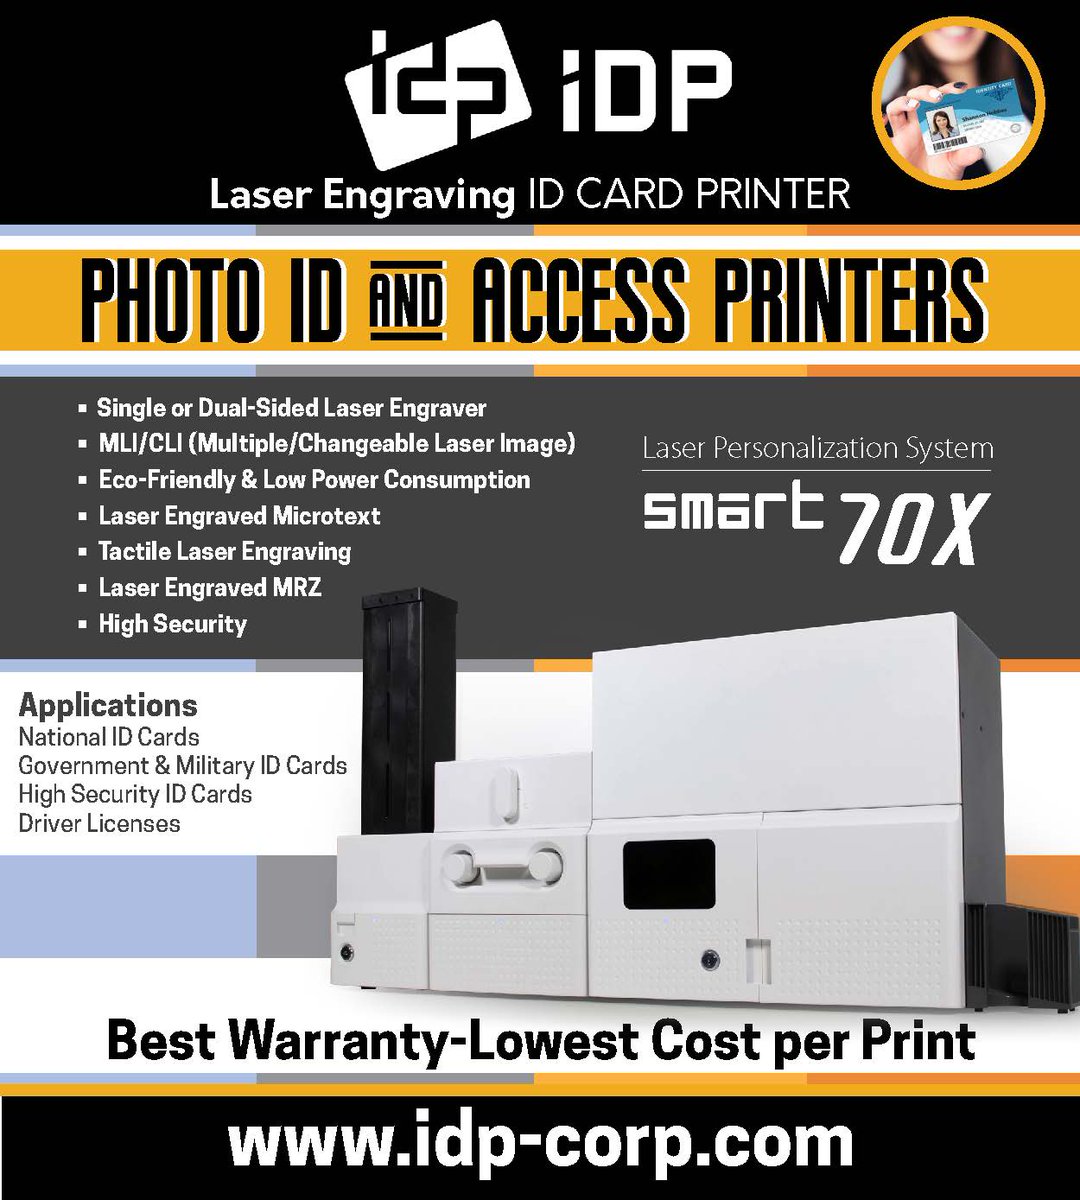 #RT @DMAlert: RT @IDPCard: Check out our Brand New IDP Laser Engraving ID Card Printer!
IDP-Corp.com 
#idcards #idcardprinter #employeebadges #socialmediamarketing #id #RFID #idcard #badgeprinter #cardprinter #security #socialmedia #digitalma…